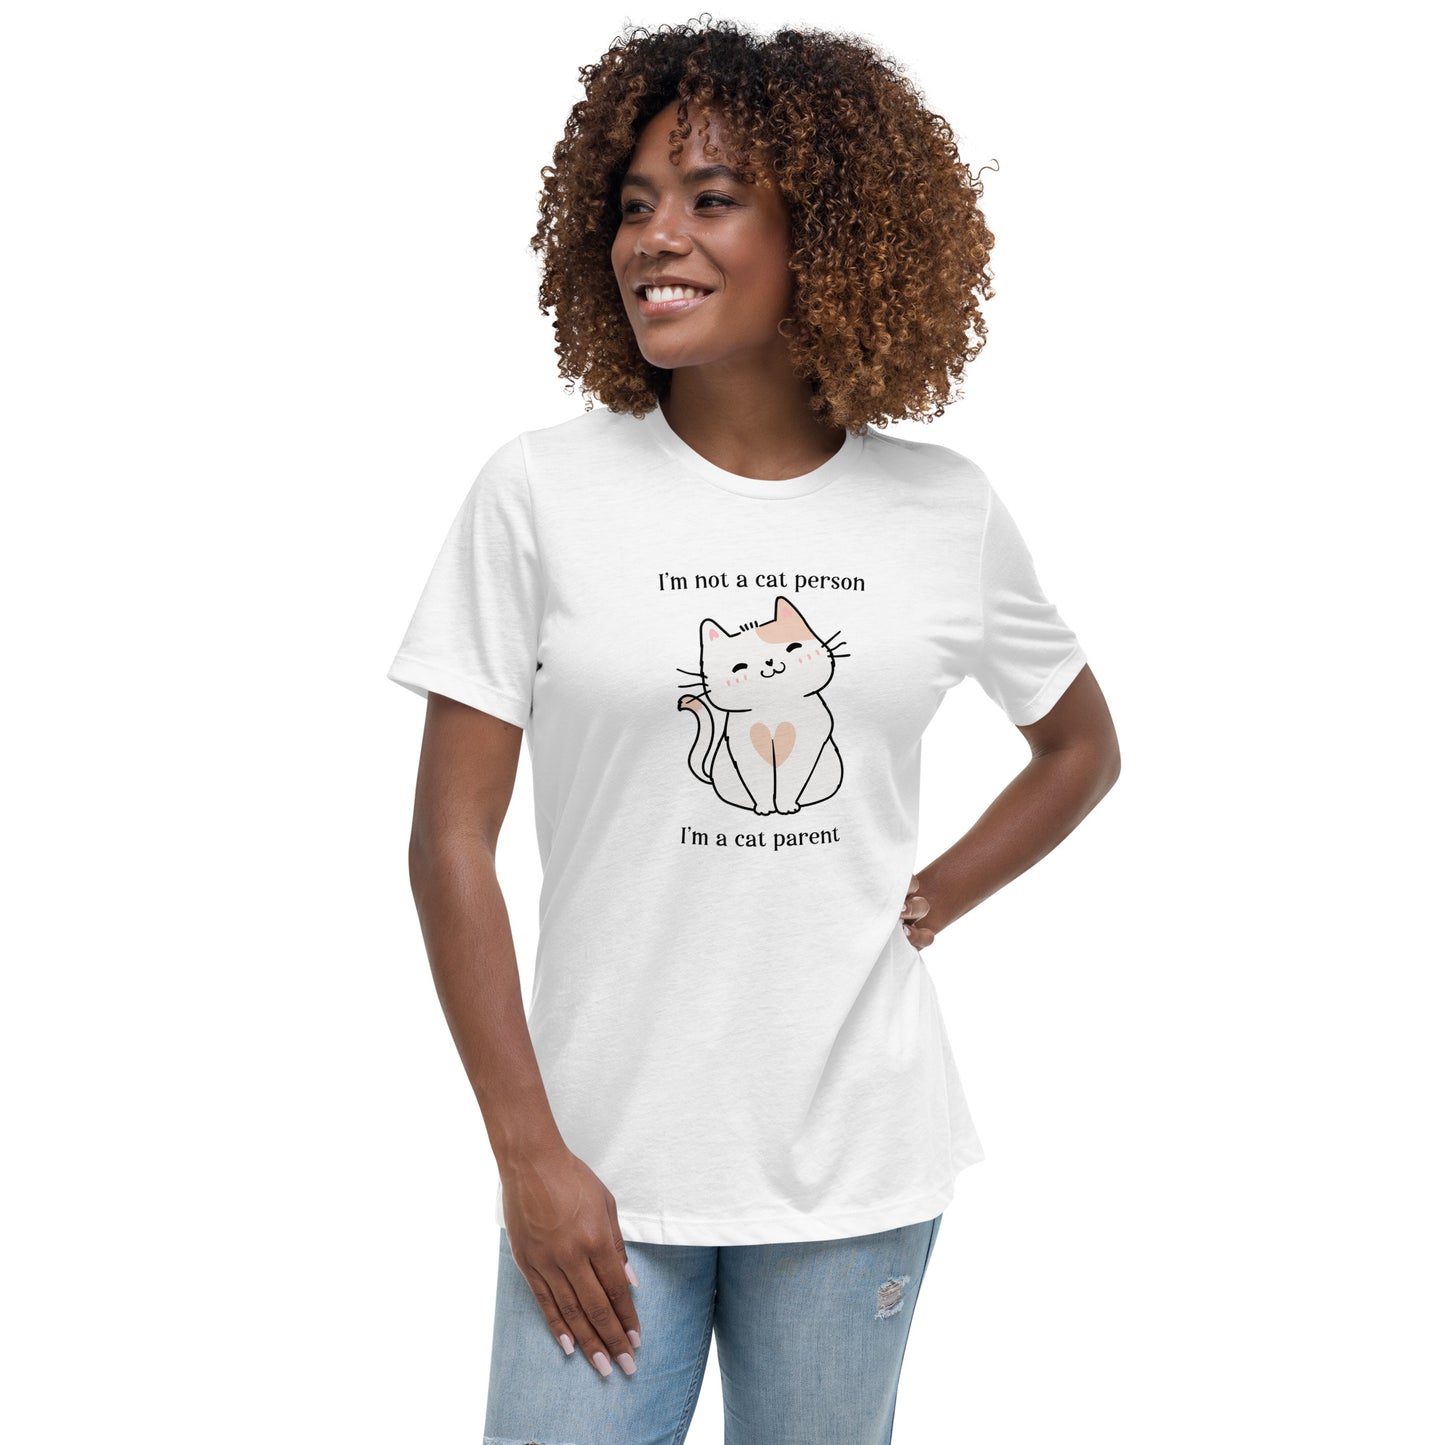 Cat parent T-Shirt